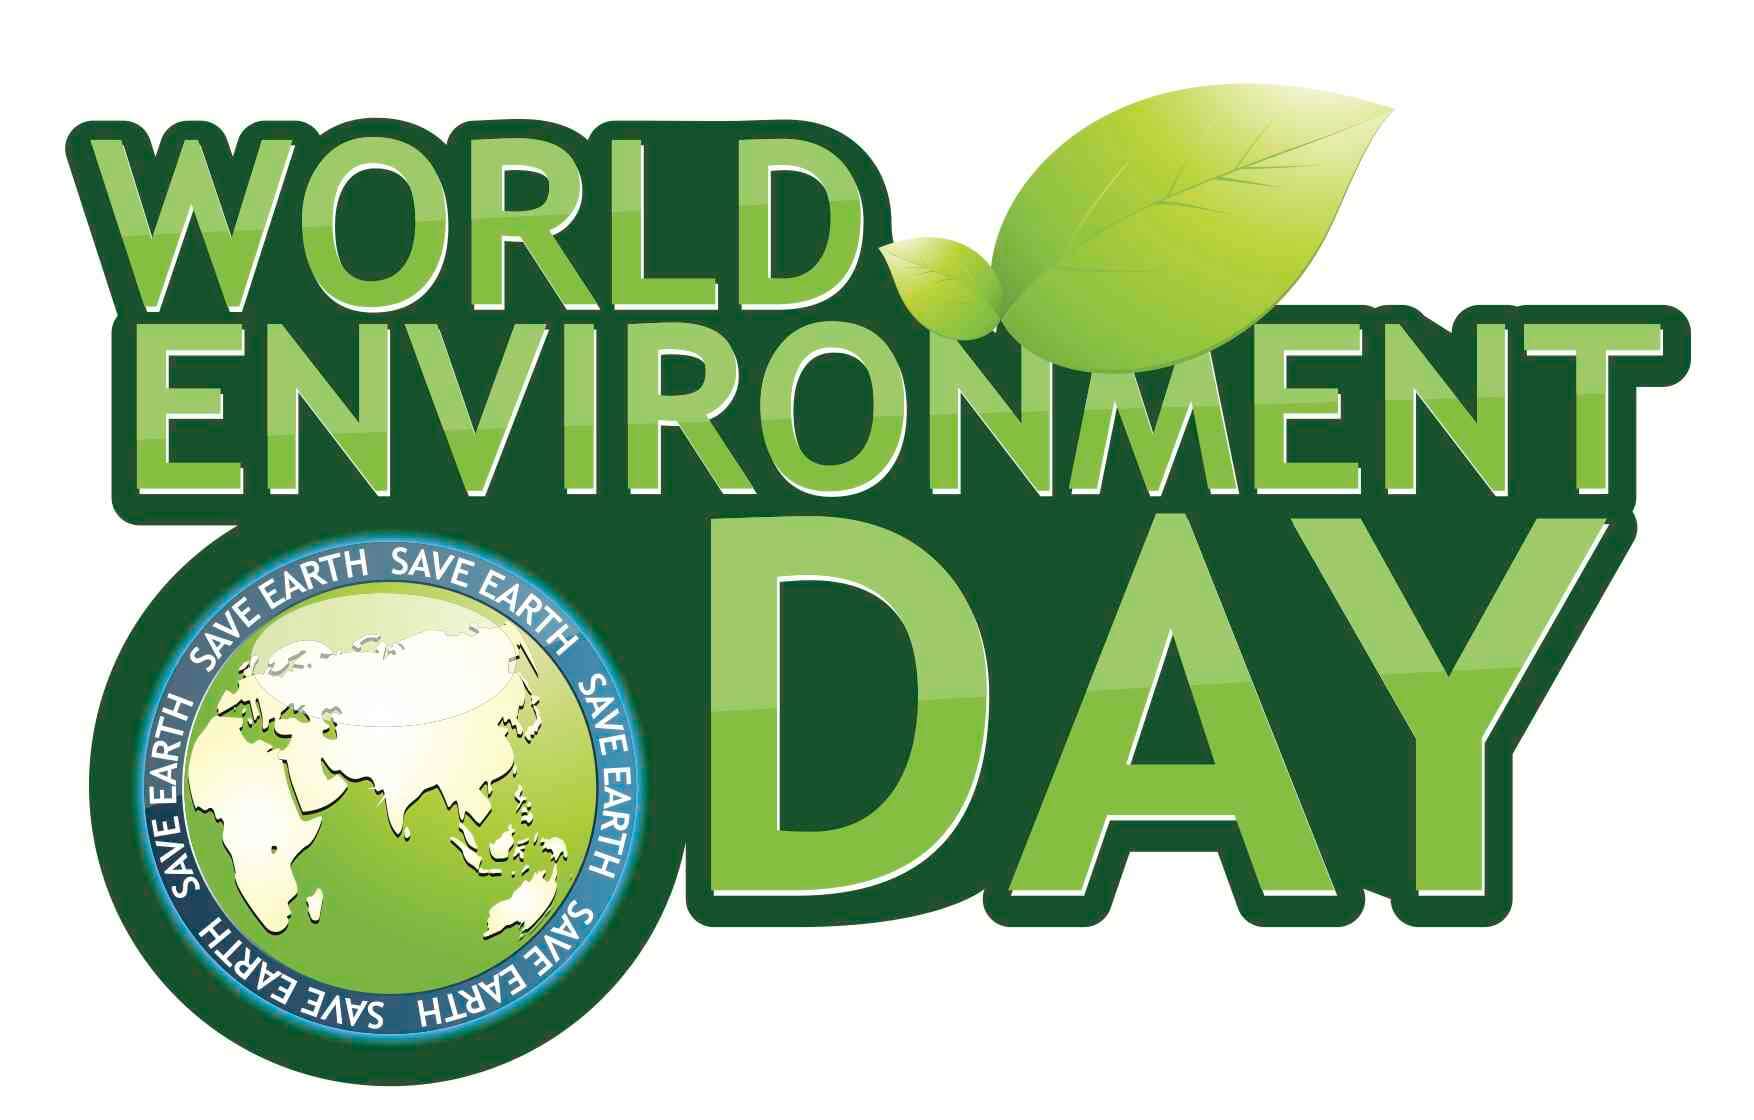 world environment day 2019 image